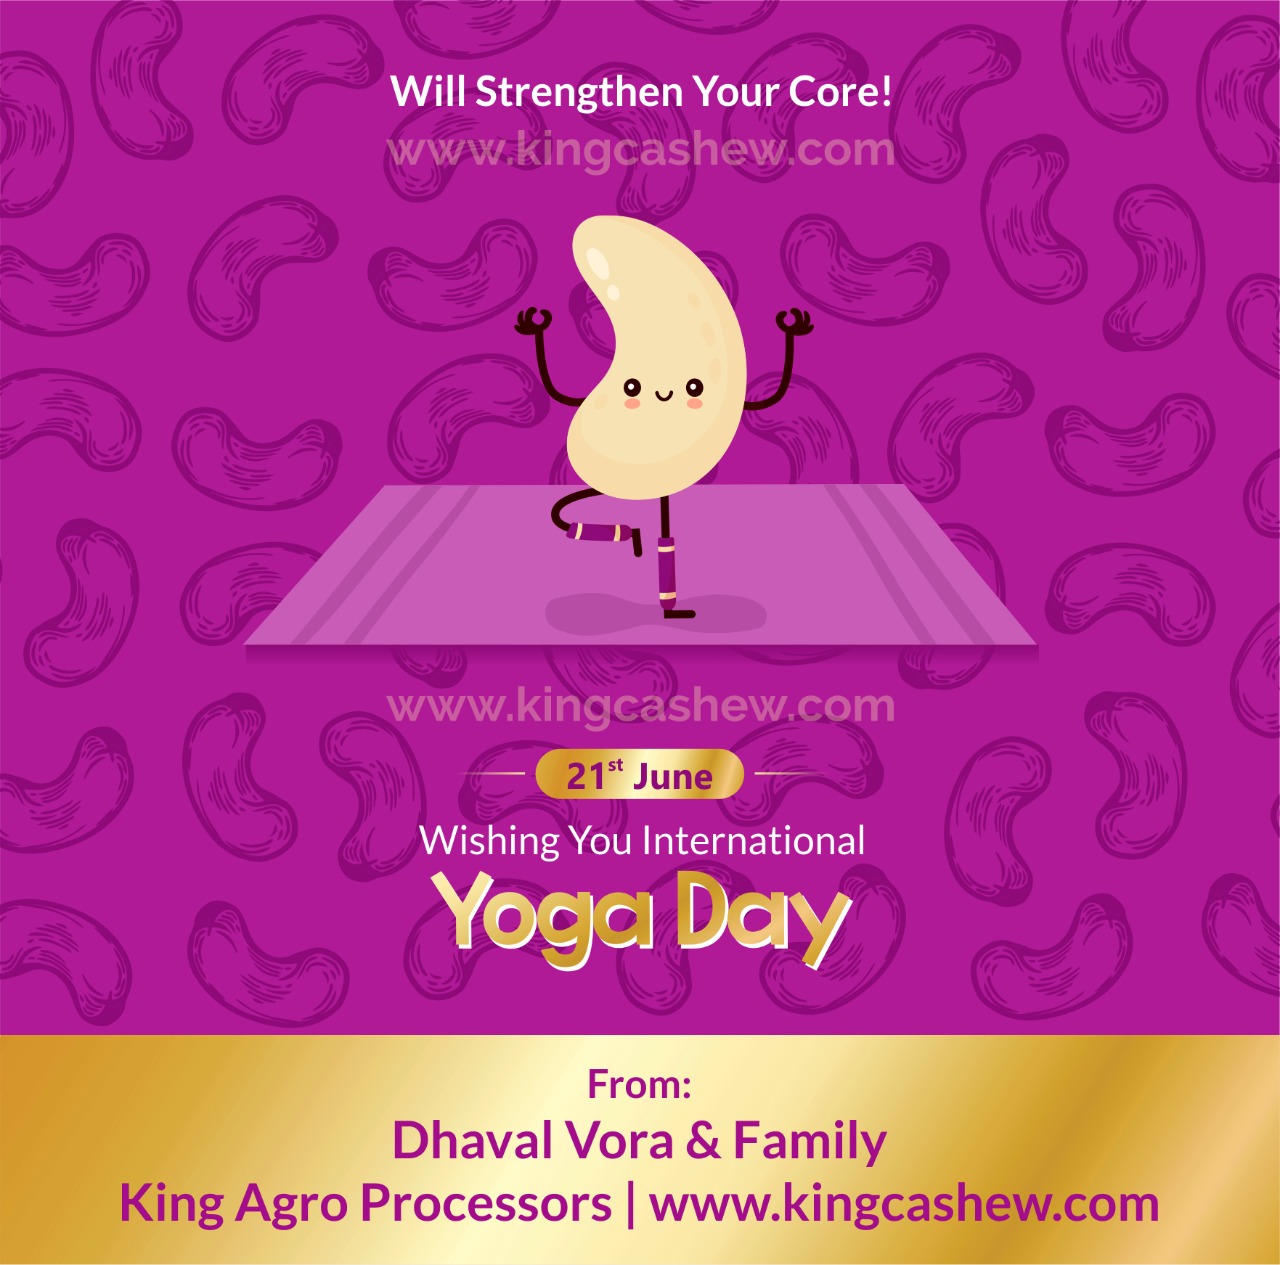 Wishing You International Yoga Day